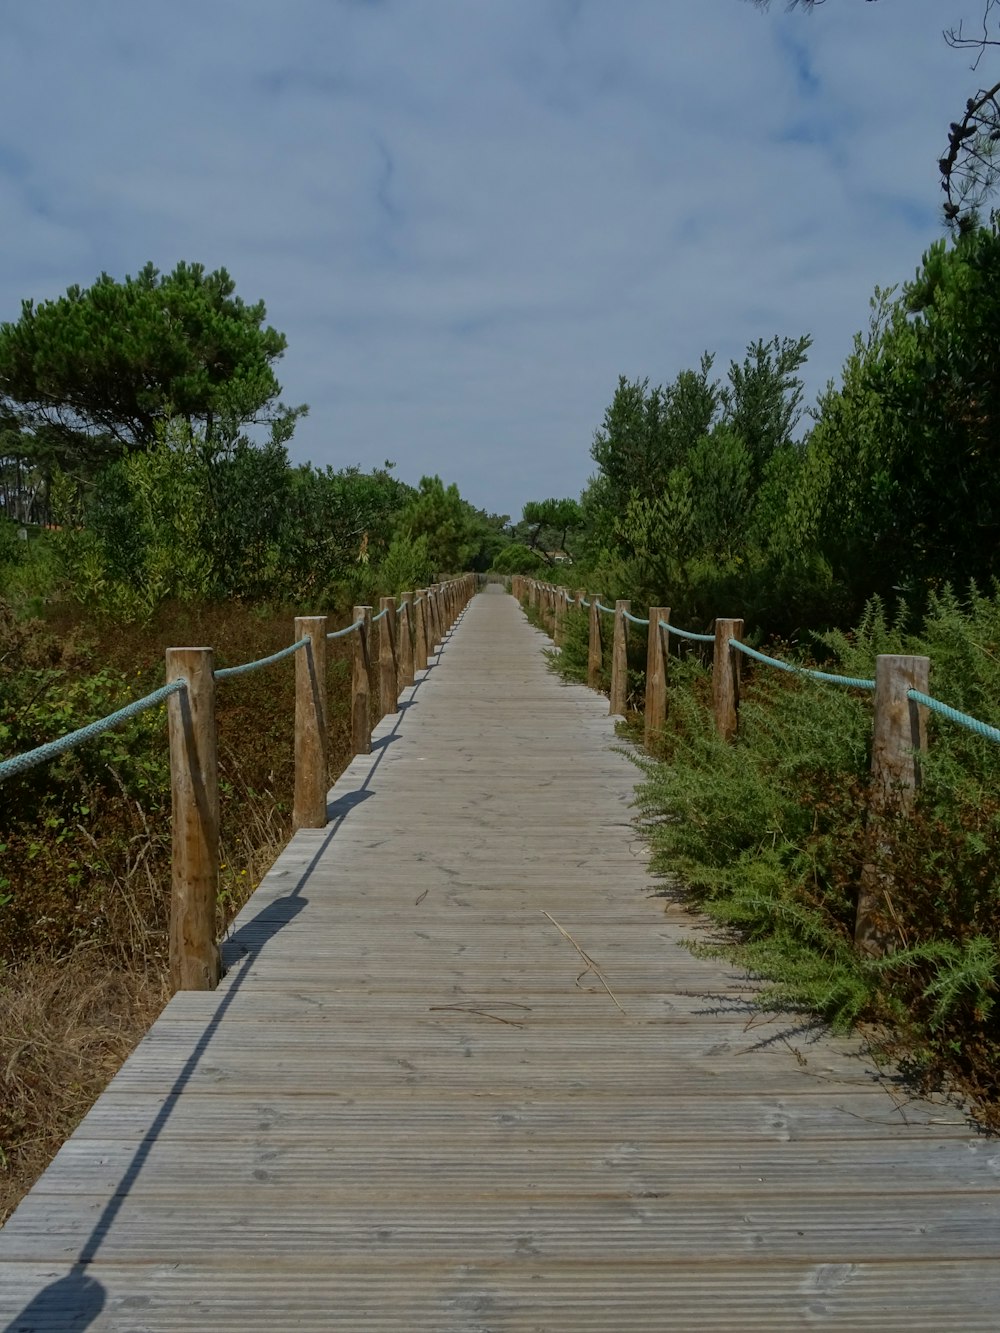 a long wooden bridge with a blue railing